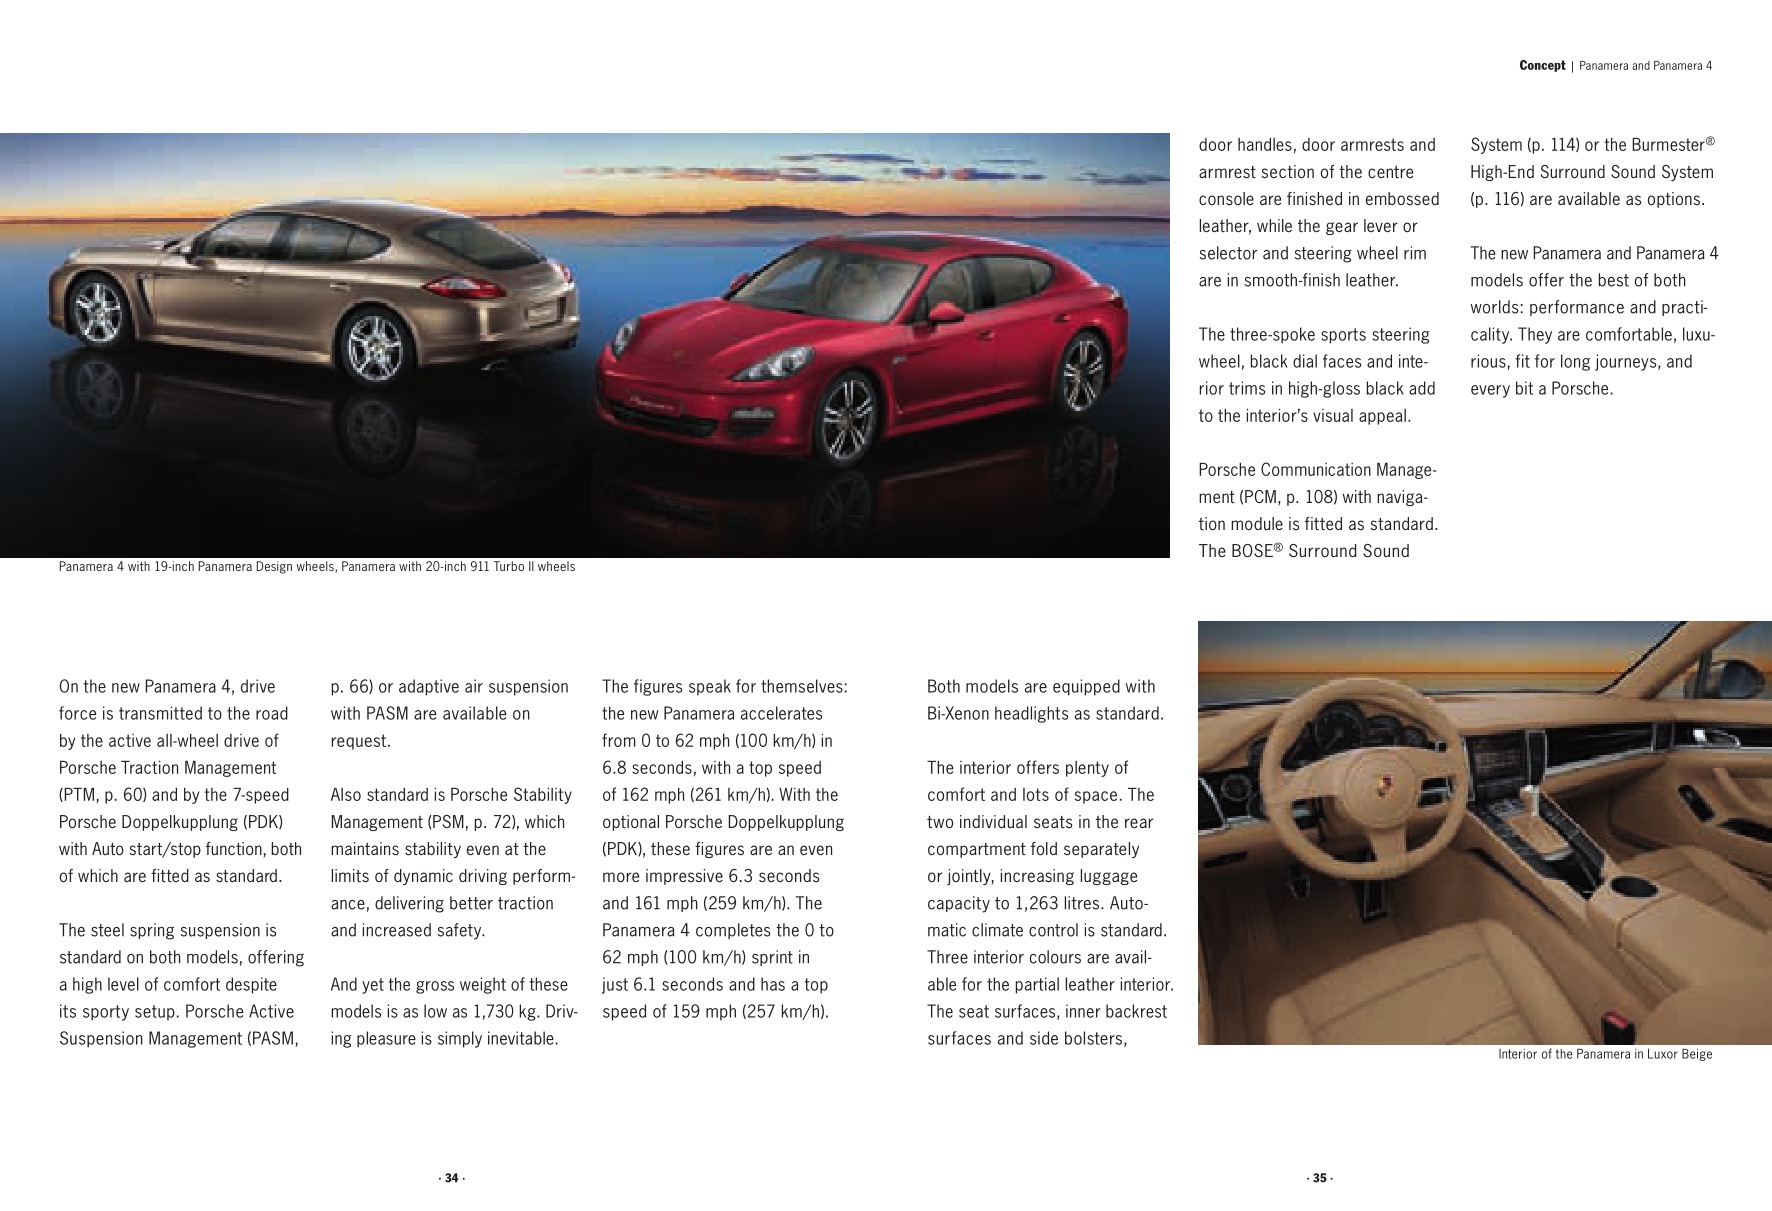 2010 Porsche Panamera Brochure Page 28